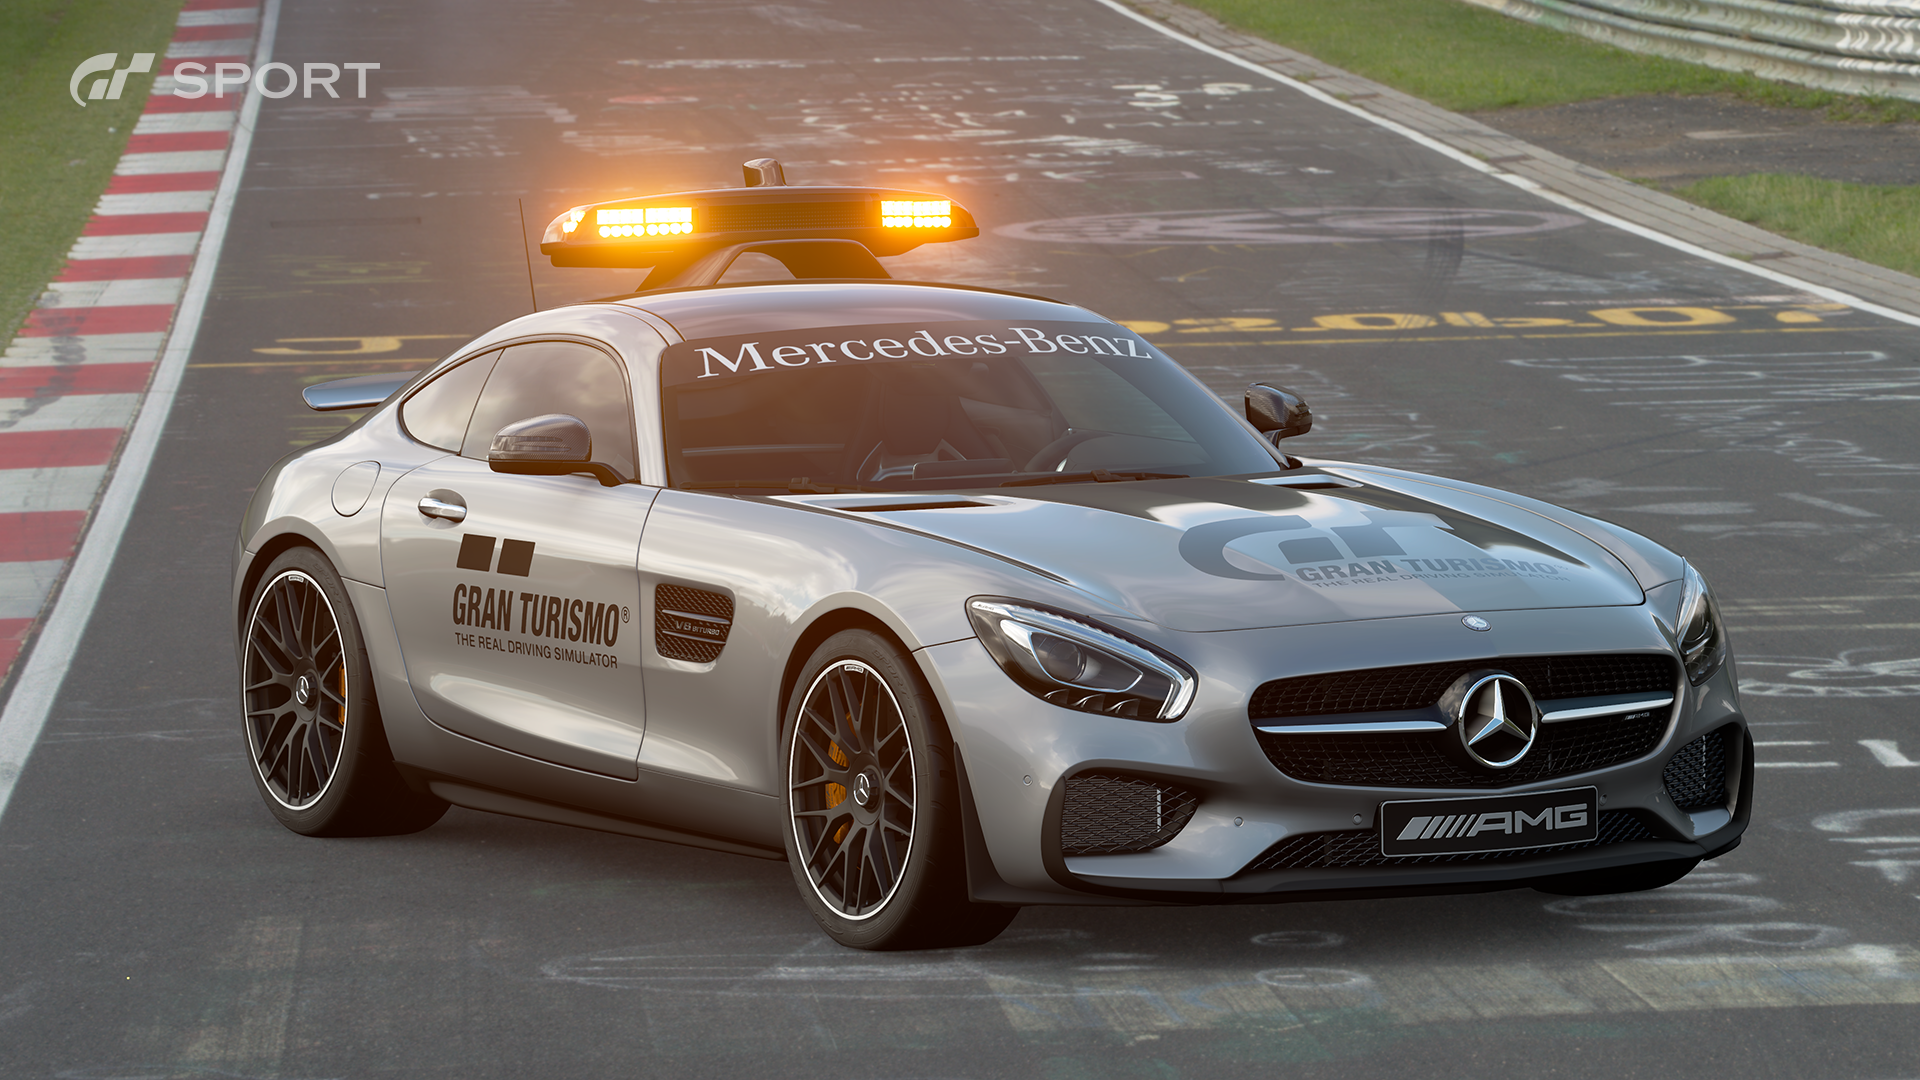 Screen GTS Mercedes AMG GT Safety Car 01 1498579196 1507910469